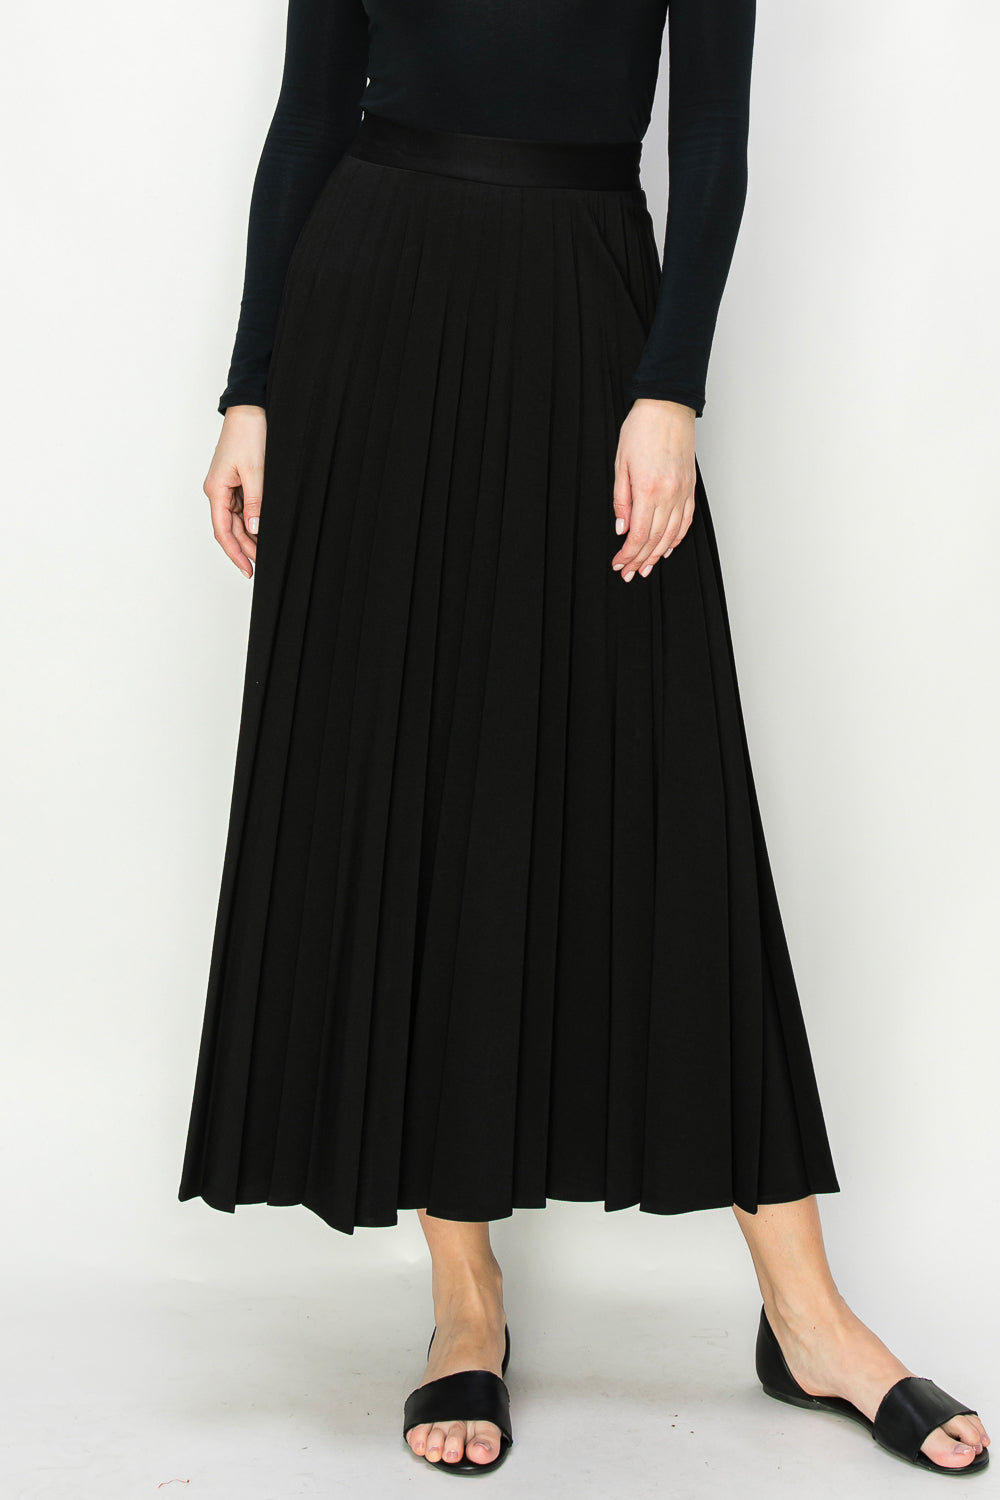 Novelty Pleated skirt elastic waist available in knee length to Maxi Length